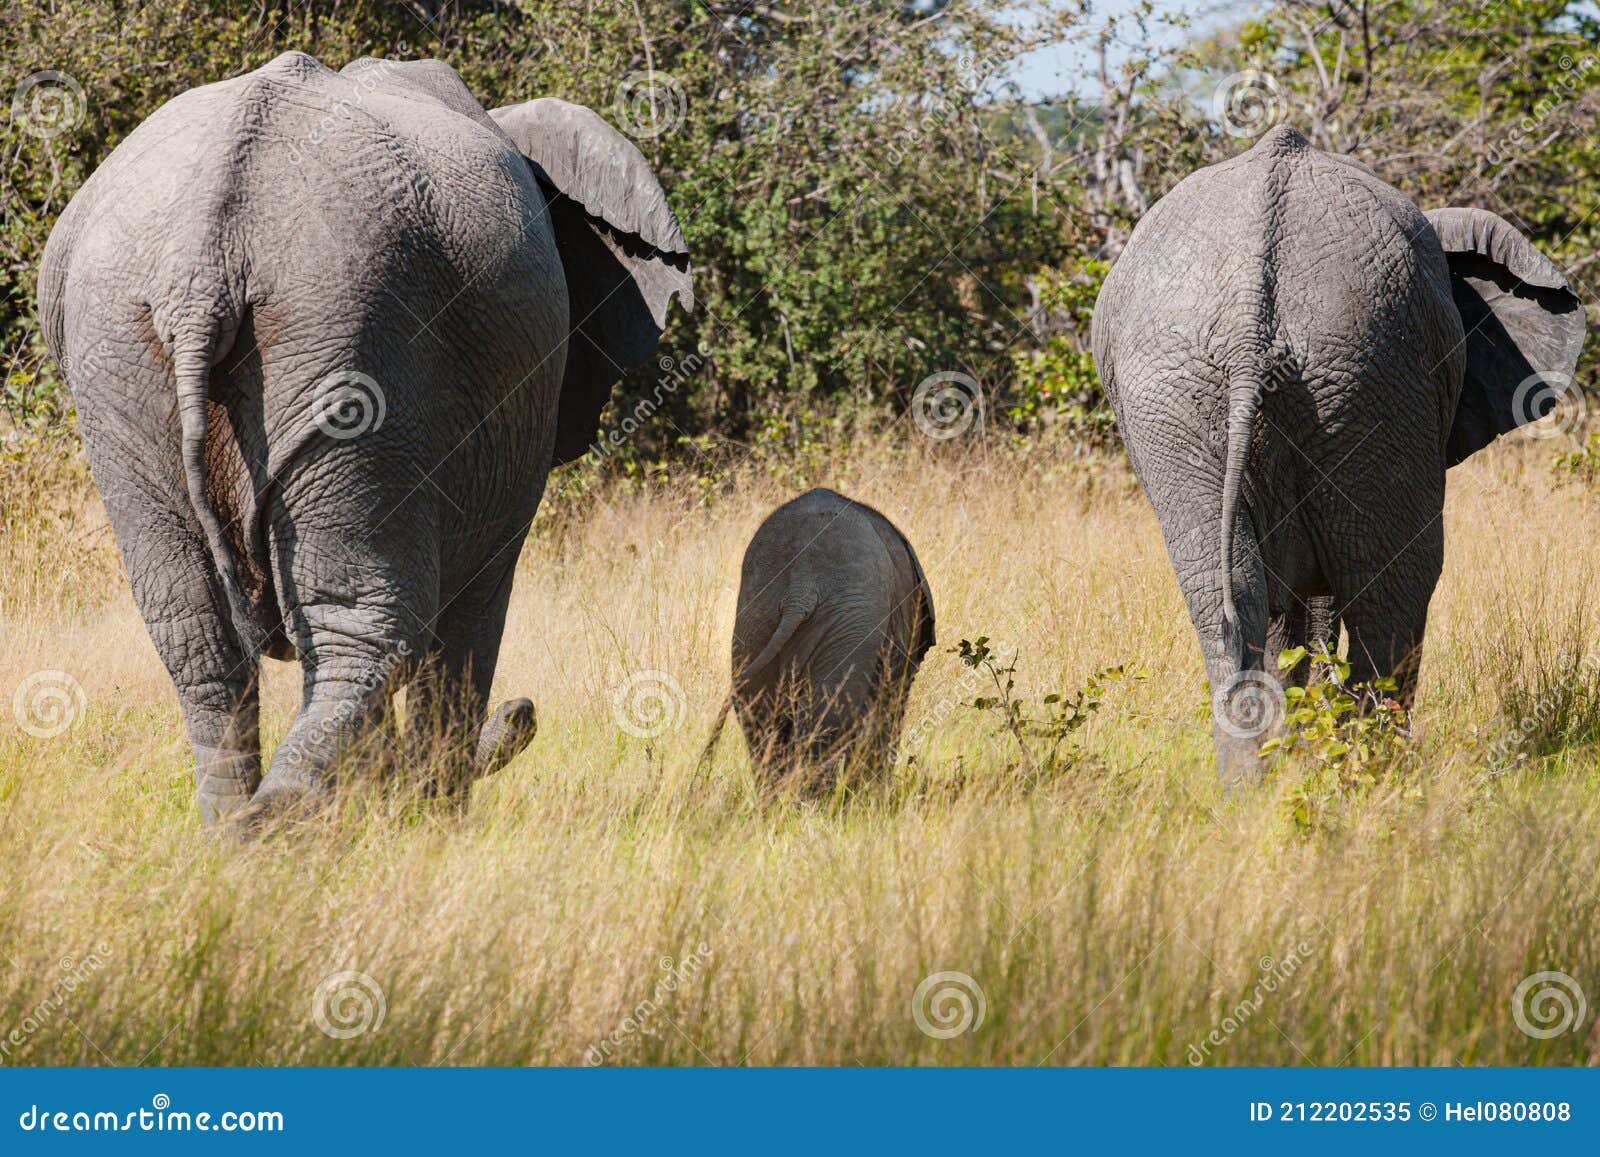 Family, Elefant Cow, Bull and Calf Walking through Savanna, Showing Backs, Africa, Elephant Parade. Stock Image - Image of wrinkled, backs: 212202535